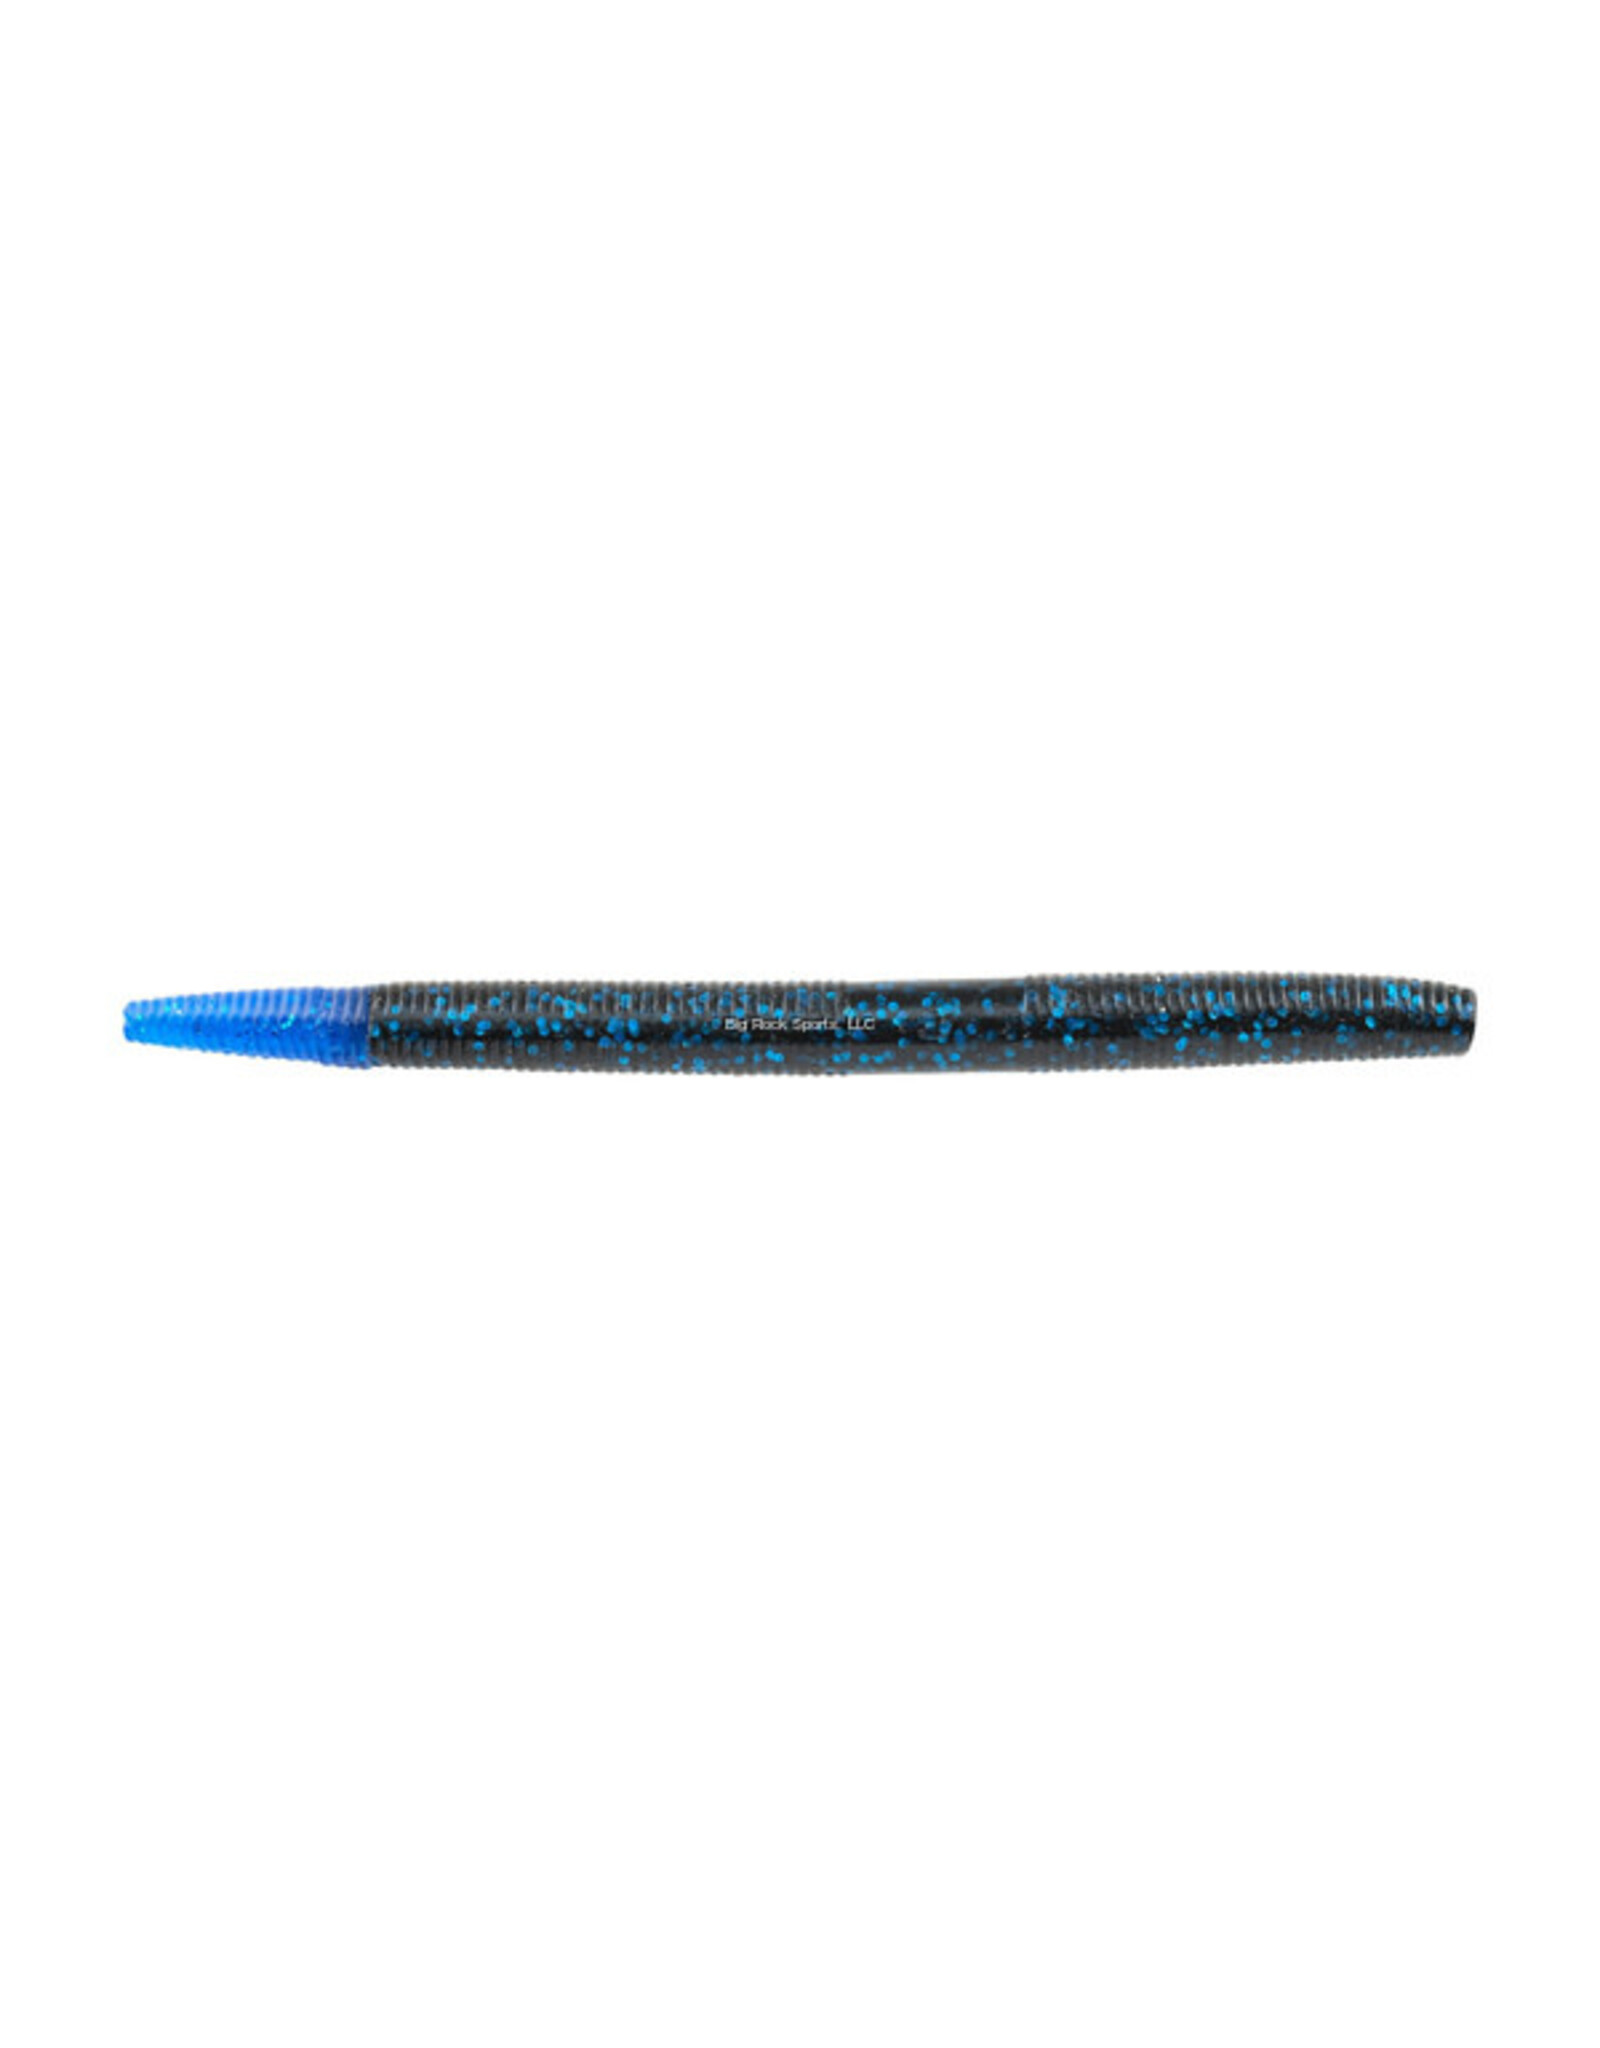 Berkley Berkley PBTG5-BBFB PowerBait General Soft Stick Bait, Classic Wiggle Action, New Colors. 5 1/4" 8ct. Black Blue Fleck/Blue